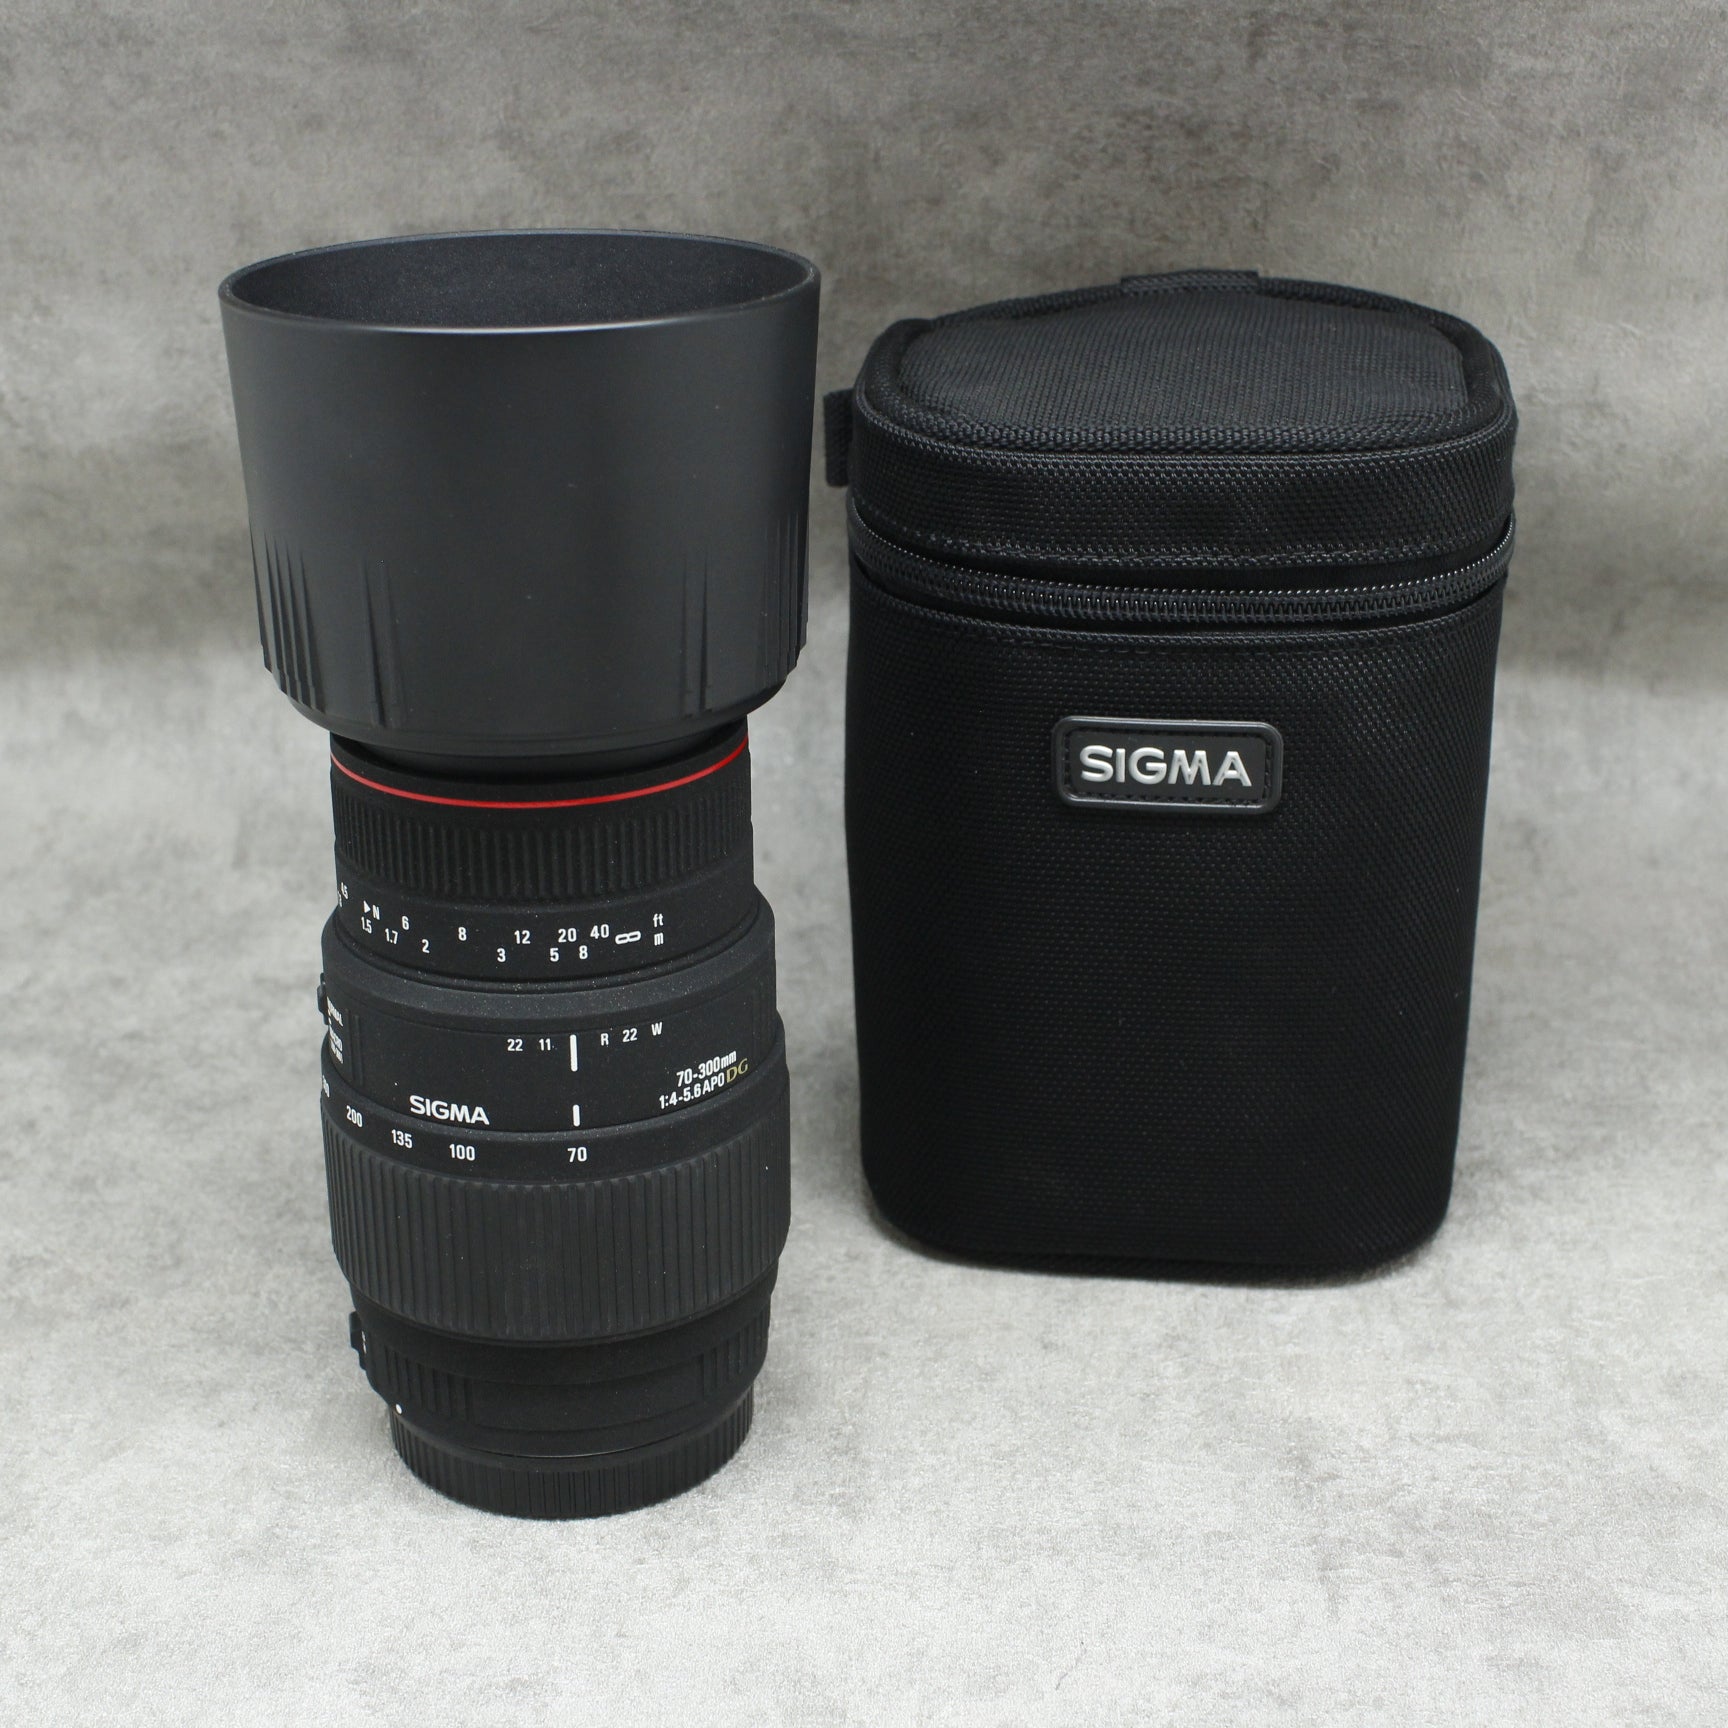 SIGMA APO 70-300mm F4-5.6 DG キャノン用レンズ(ズーム)